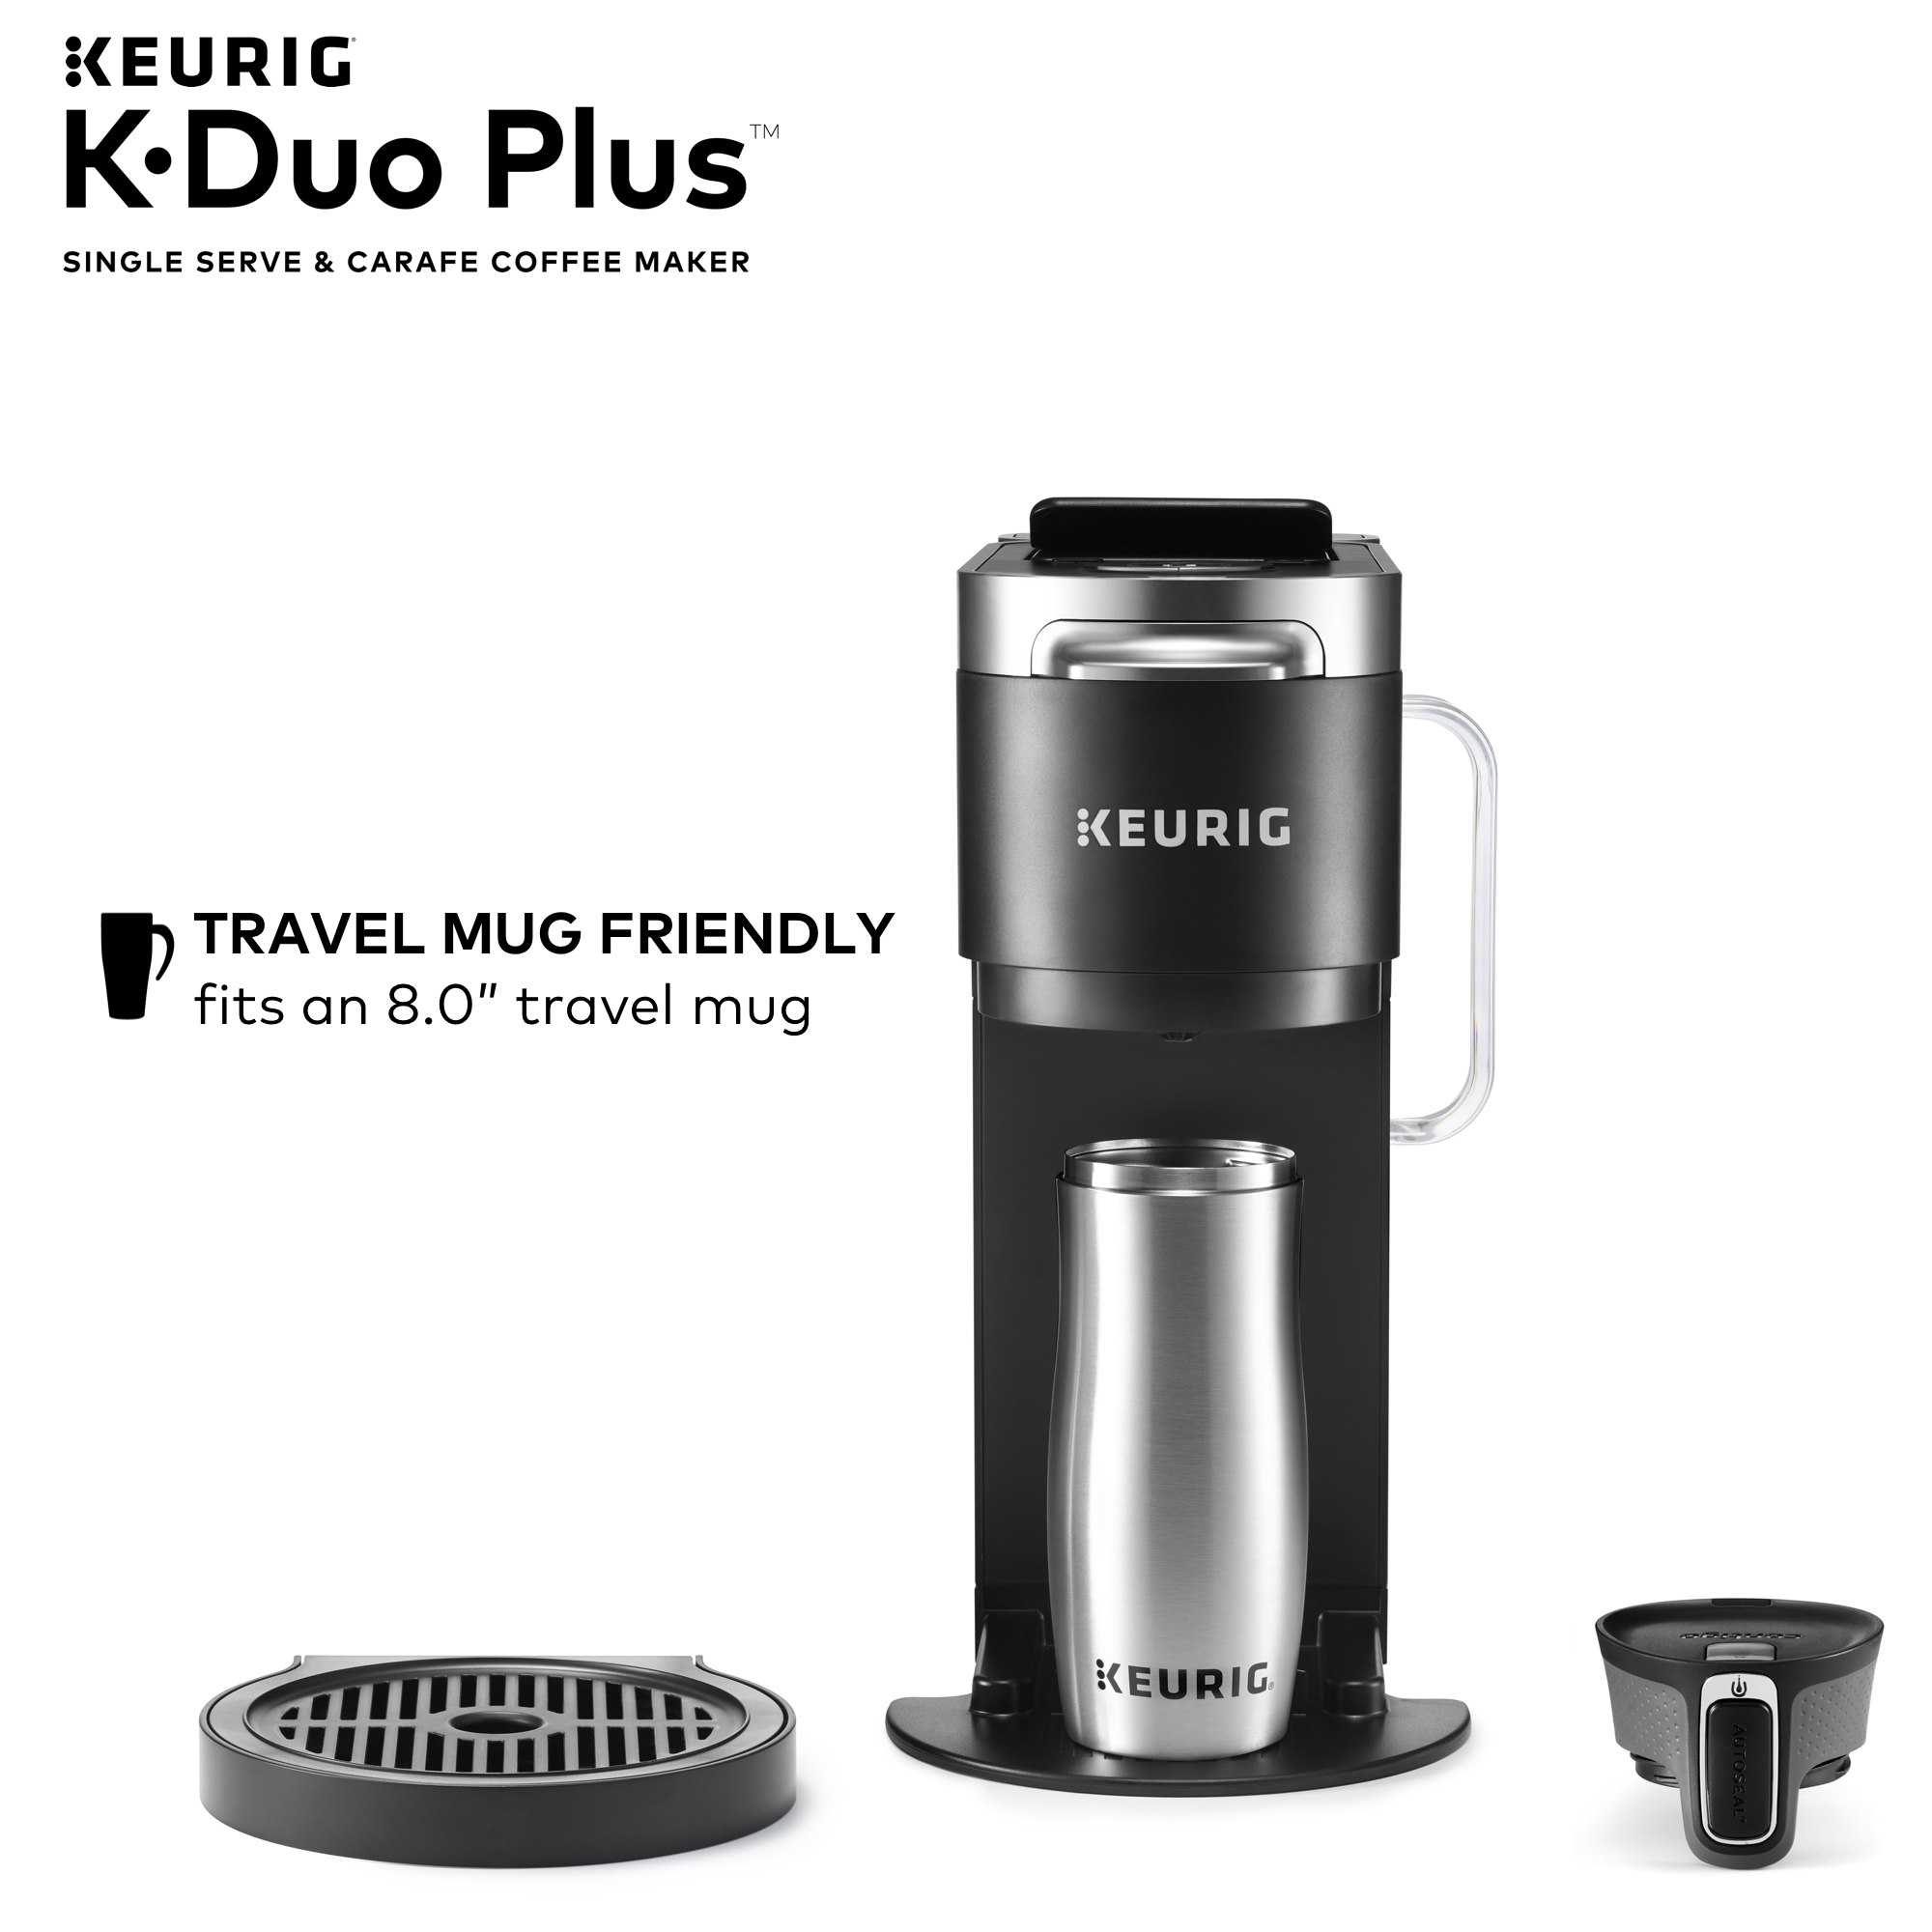 Keurig K-Duo Plus Single Serve & Carafe Coffee Maker - image 11 of 25